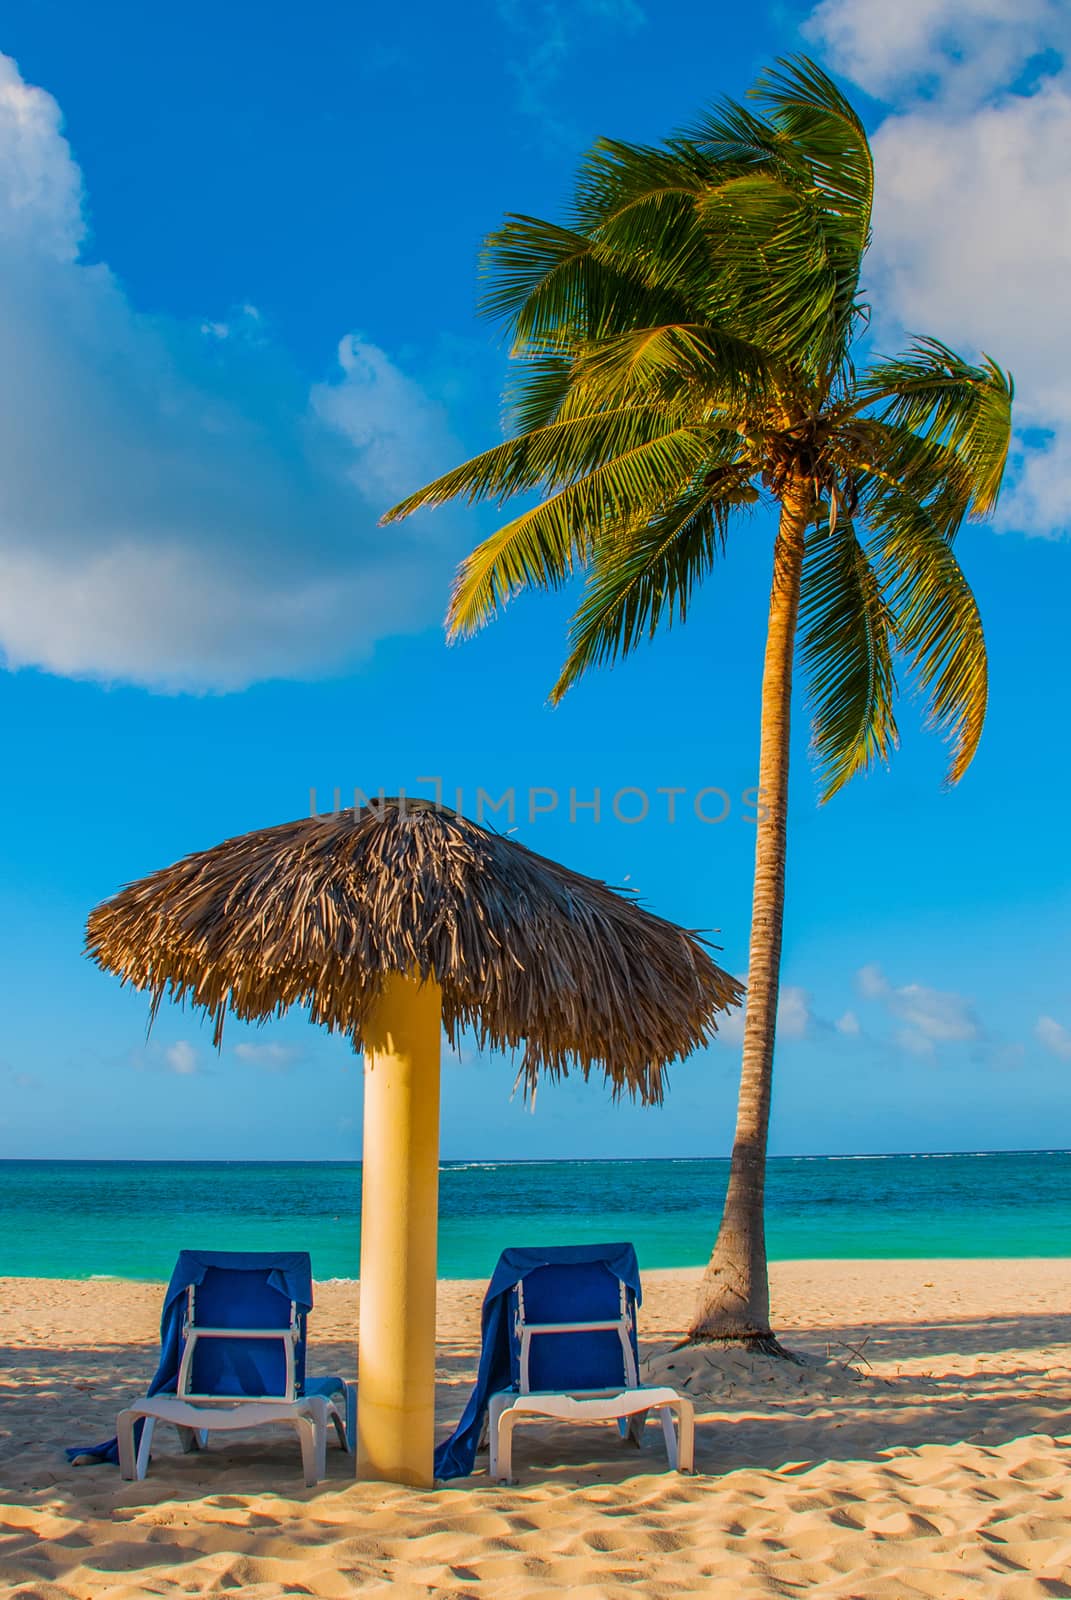 Holguin, Cuba, Playa Esmeralda. Umbrella and two lounge chairs around palm trees. Tropical beach on the Caribbean sea